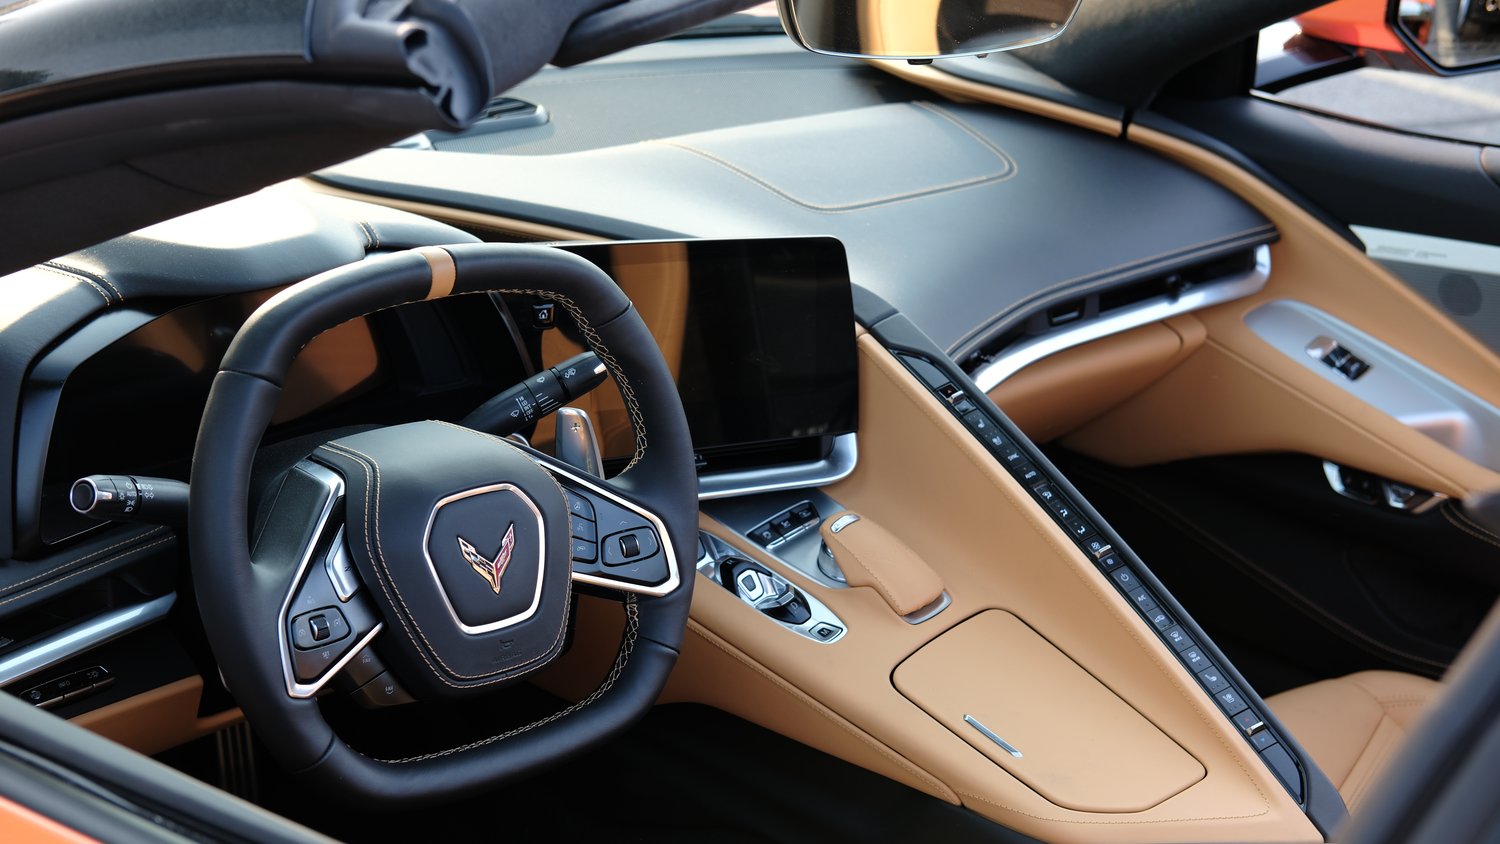 Interior cockpit of a newer Chevy Corvette.